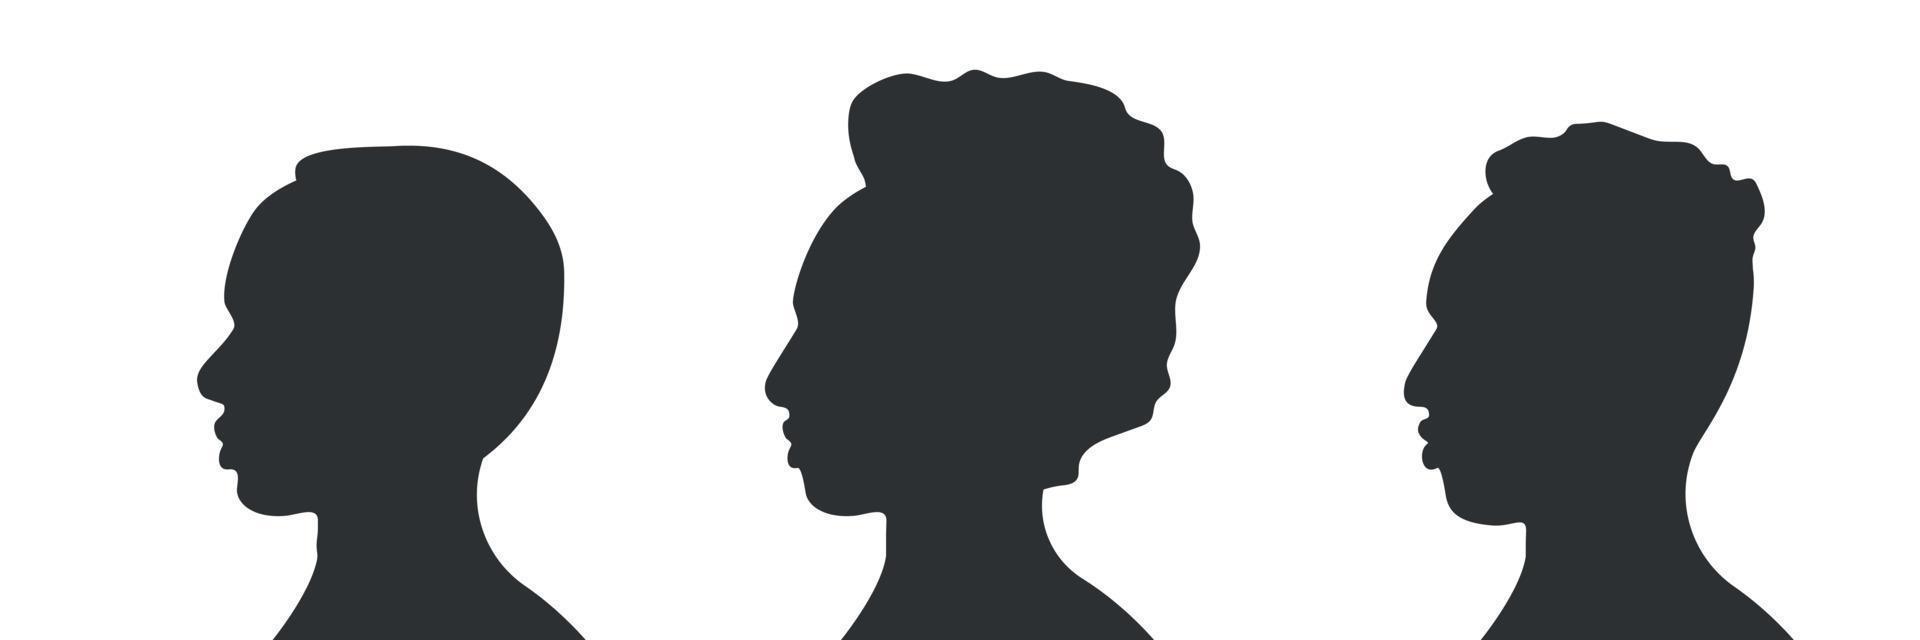 Afrikaanse Amerikaans mannen set. menselijk silhouet contour. mannetje portret gezicht. vector illustratie